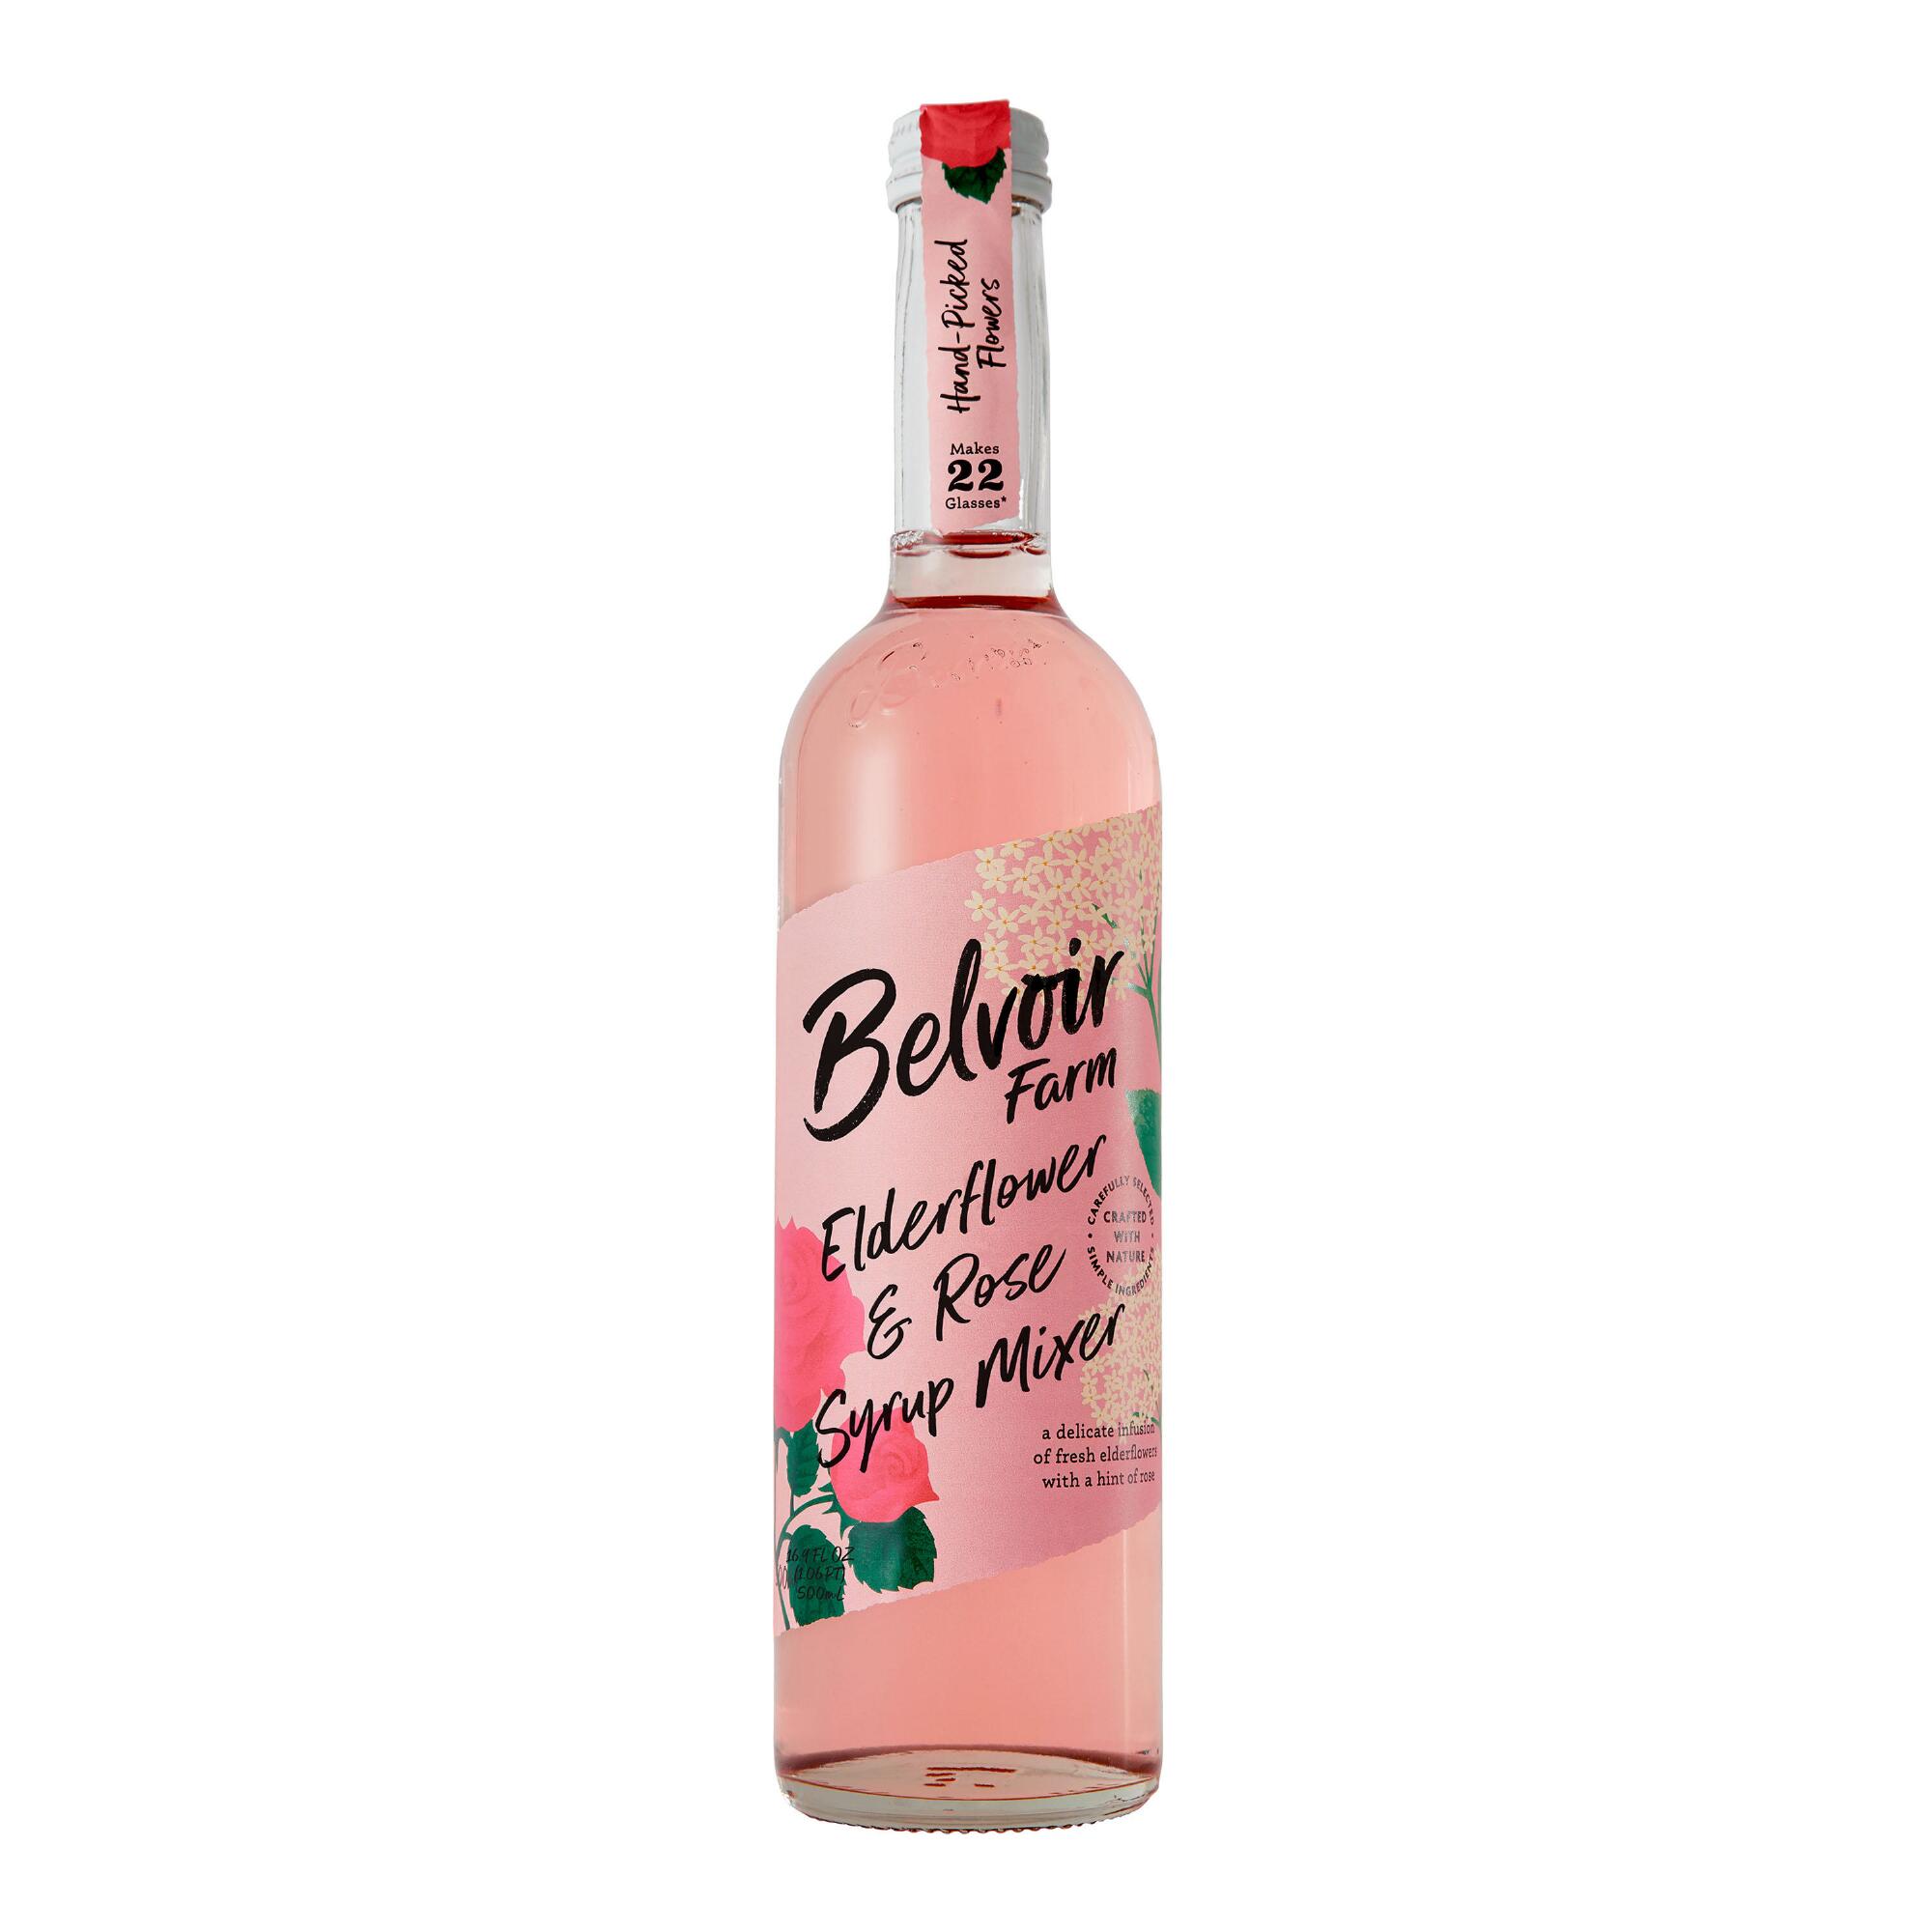 Belvoir Farm Elderflower & Rose Syrup Mixer by World Market